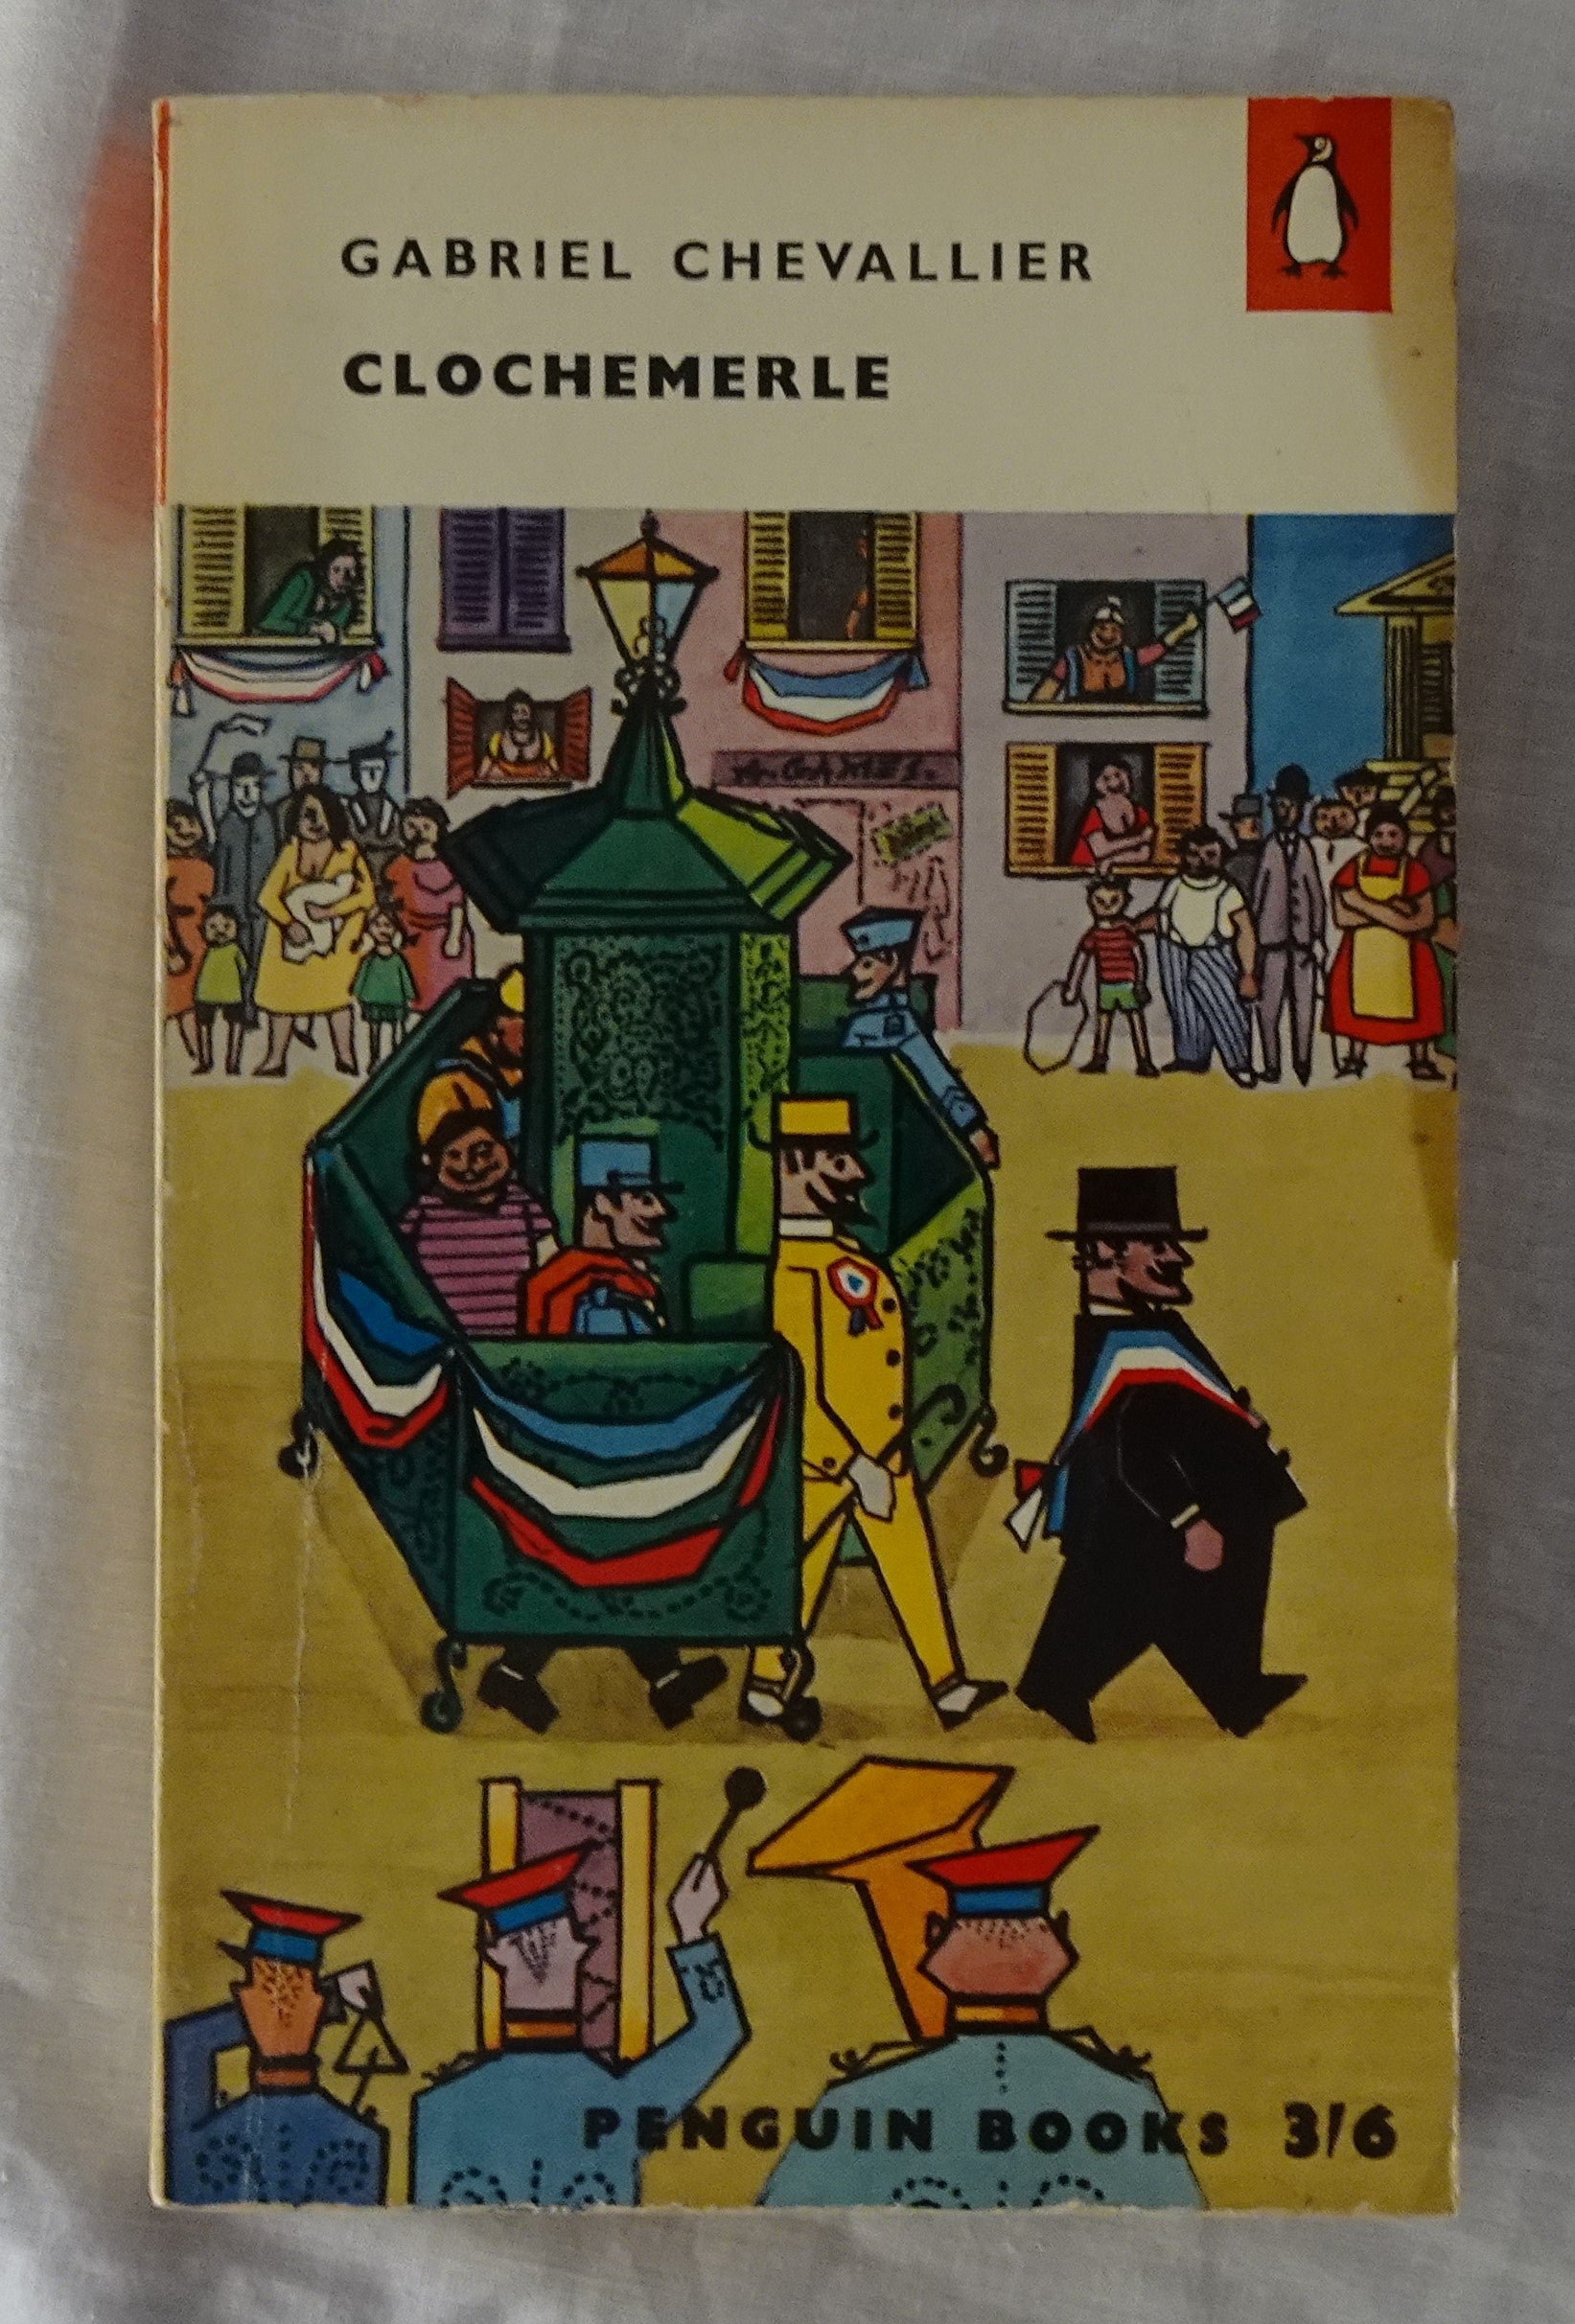 Clochemerle  by Gabriel Chevallier  translated by Jocelyn Godefoi